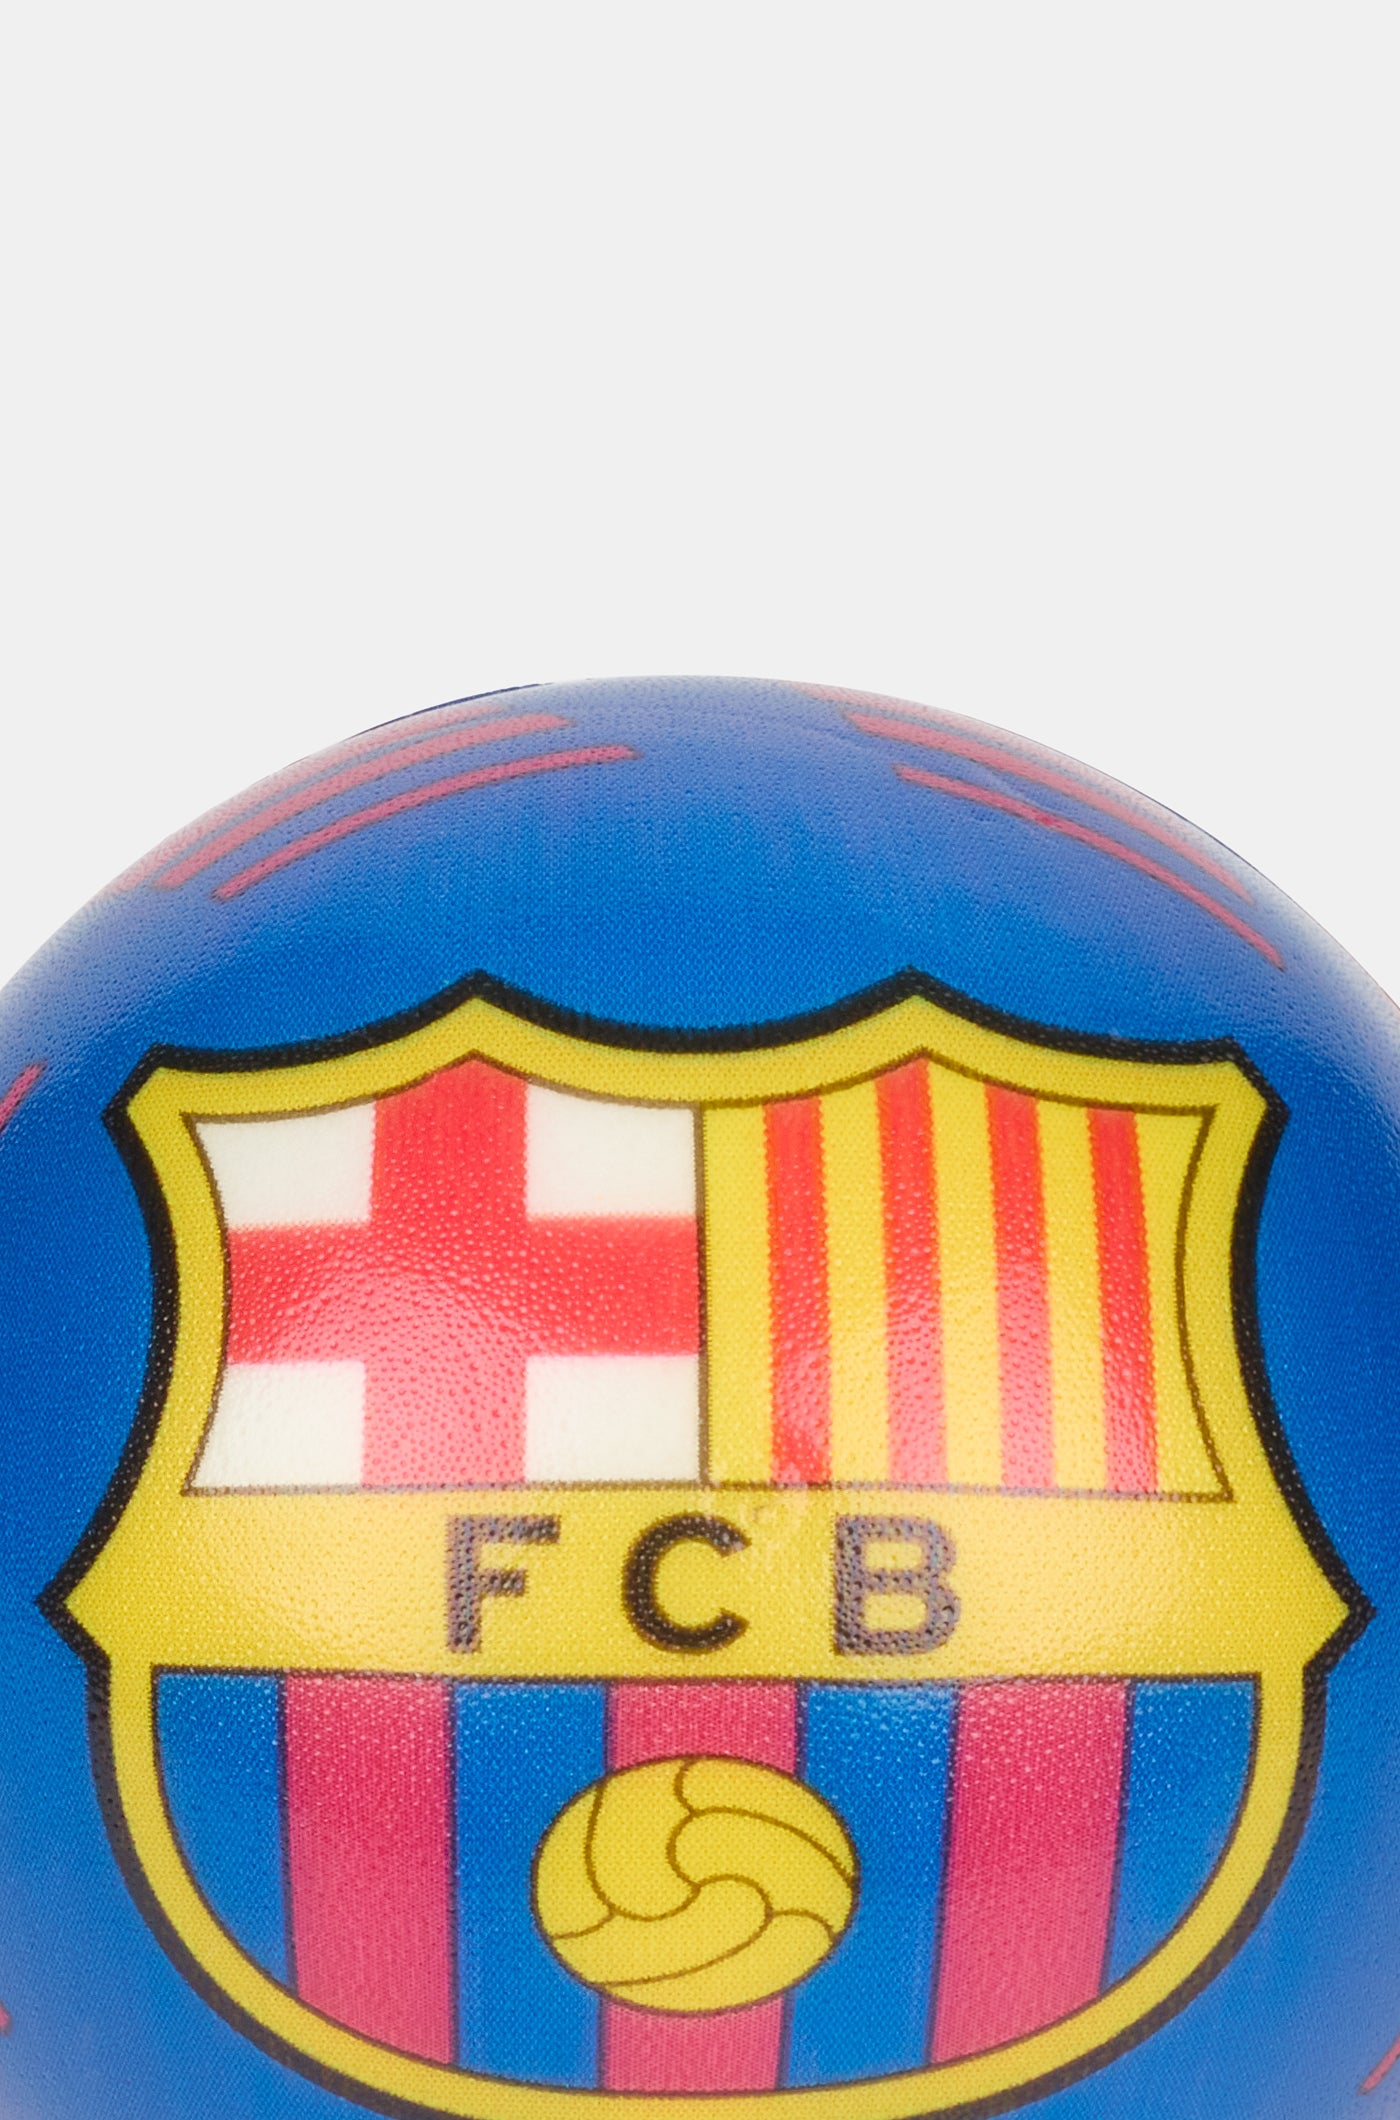 Pelota antiestrés FC Barcelona